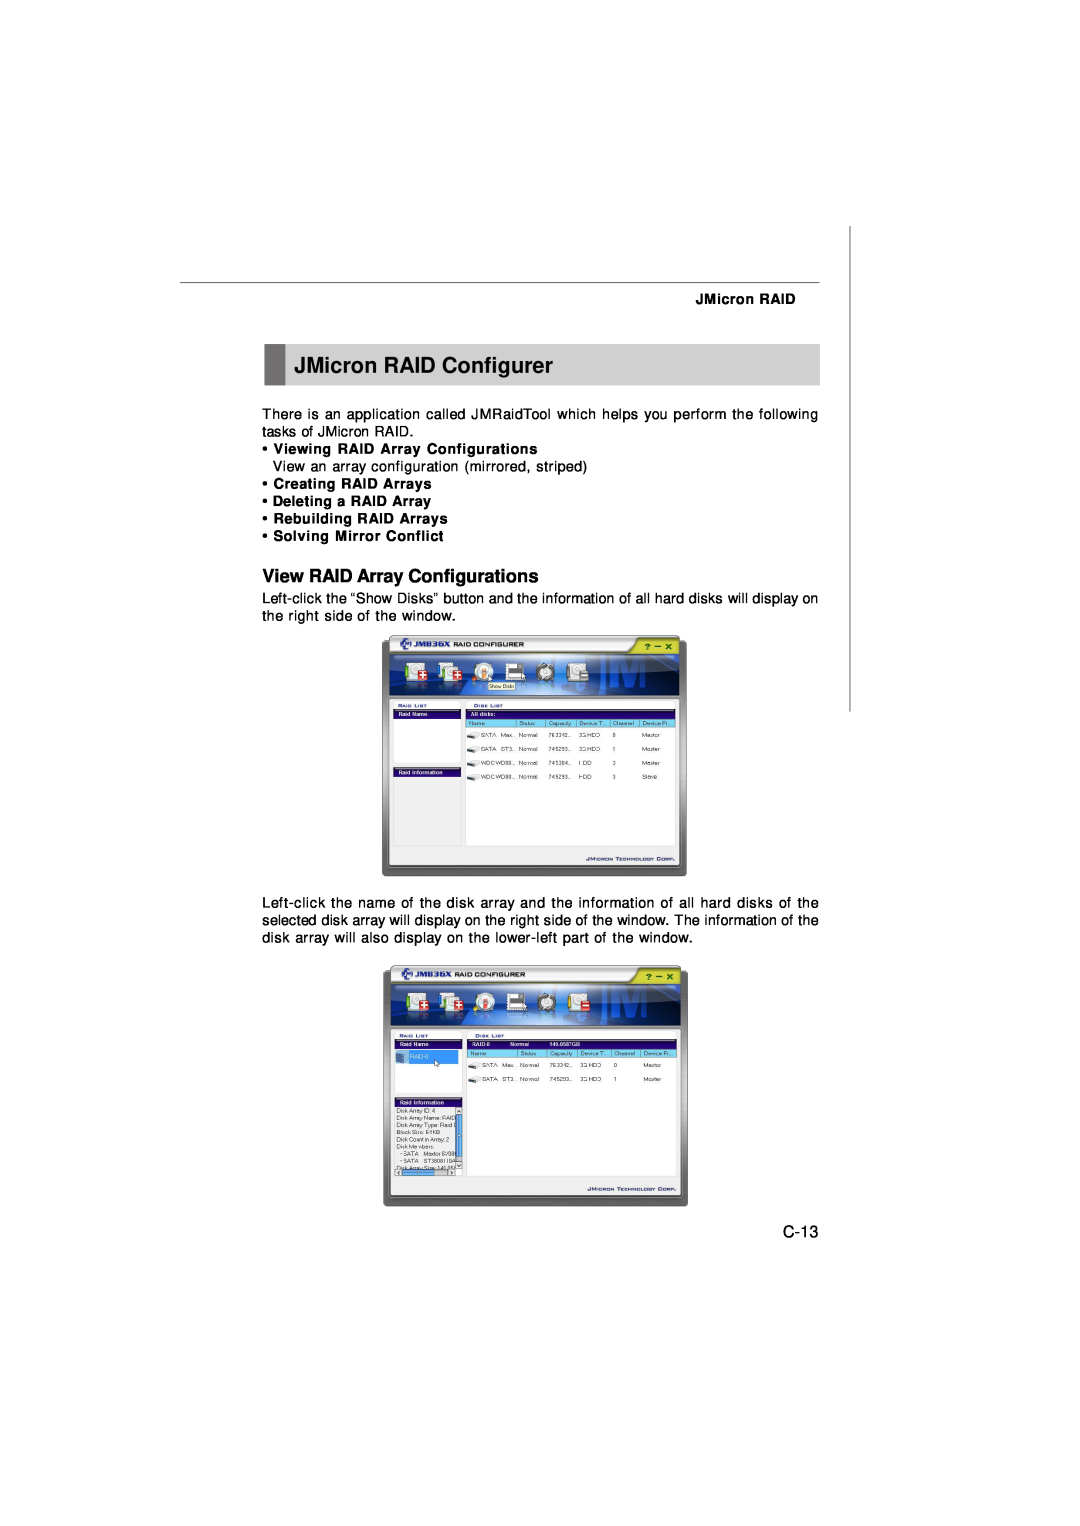 Nvidia MS-7374 manual JMicron RAID Configurer, View RAID Array Configurations, C-13, Viewing RAID Array Configurations 